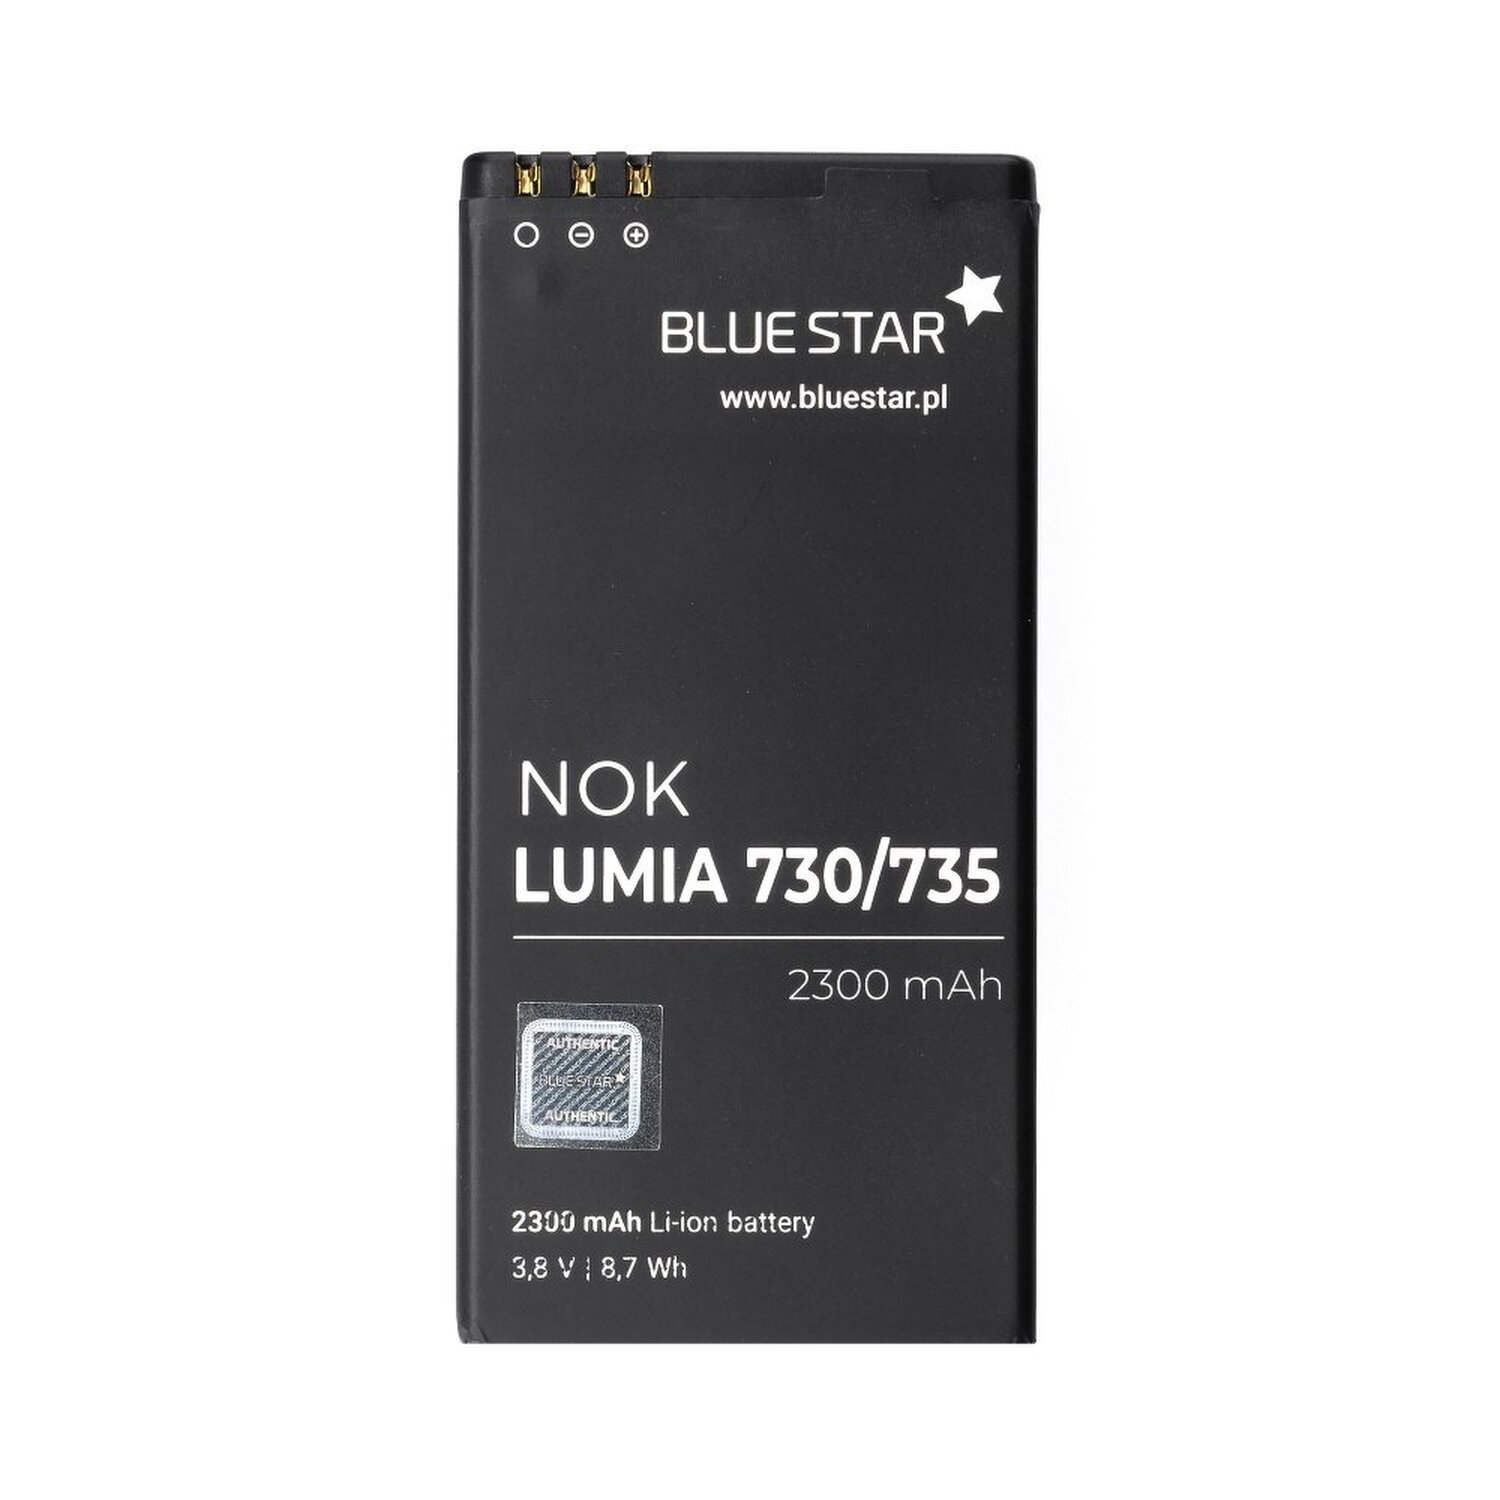 BLUESTAR Akku für 730 Handyakku Nokia Lumia Li-Ion